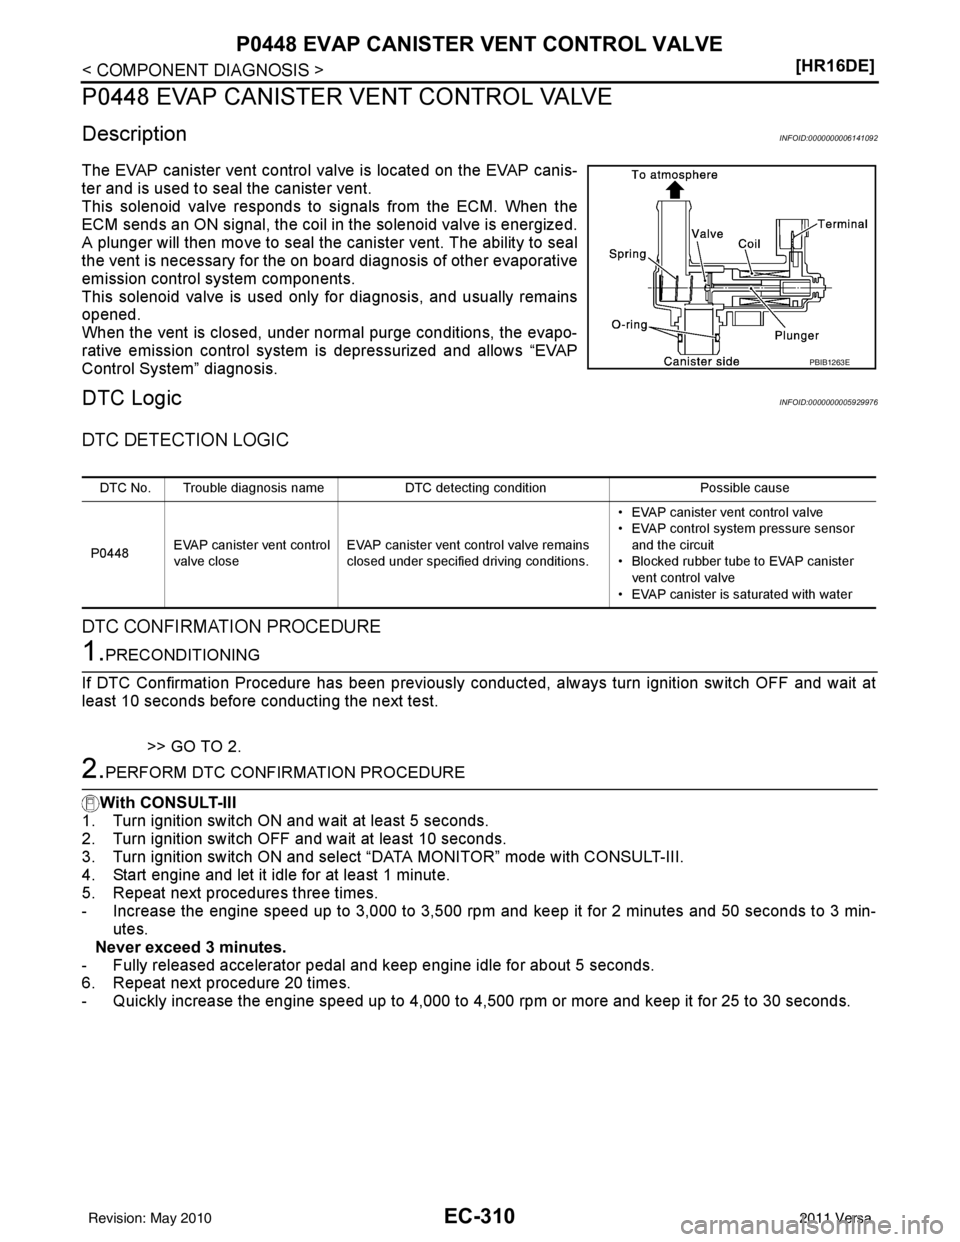 NISSAN LATIO 2011  Service Repair Manual EC-310
< COMPONENT DIAGNOSIS >[HR16DE]
P0448 EVAP CANISTER VENT CONTROL VALVE
P0448 EVAP CANISTER VENT CONTROL VALVE
DescriptionINFOID:0000000006141092
The EVAP canister vent control 
valve is located